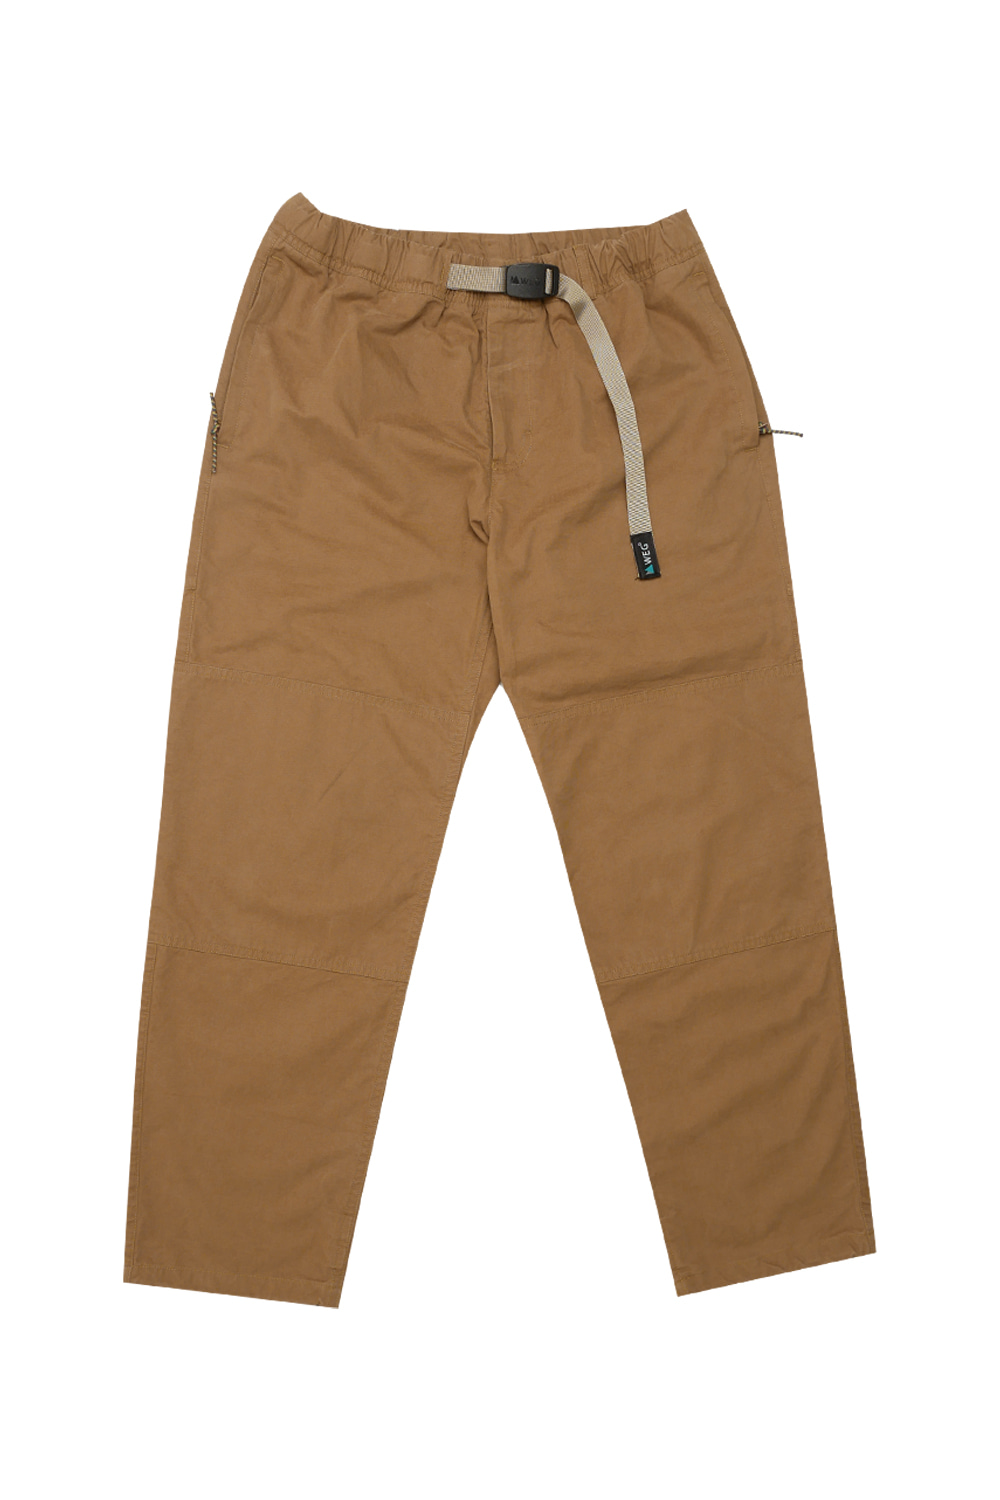 Banff Warm Cotton Beltpants (Camel Brown)